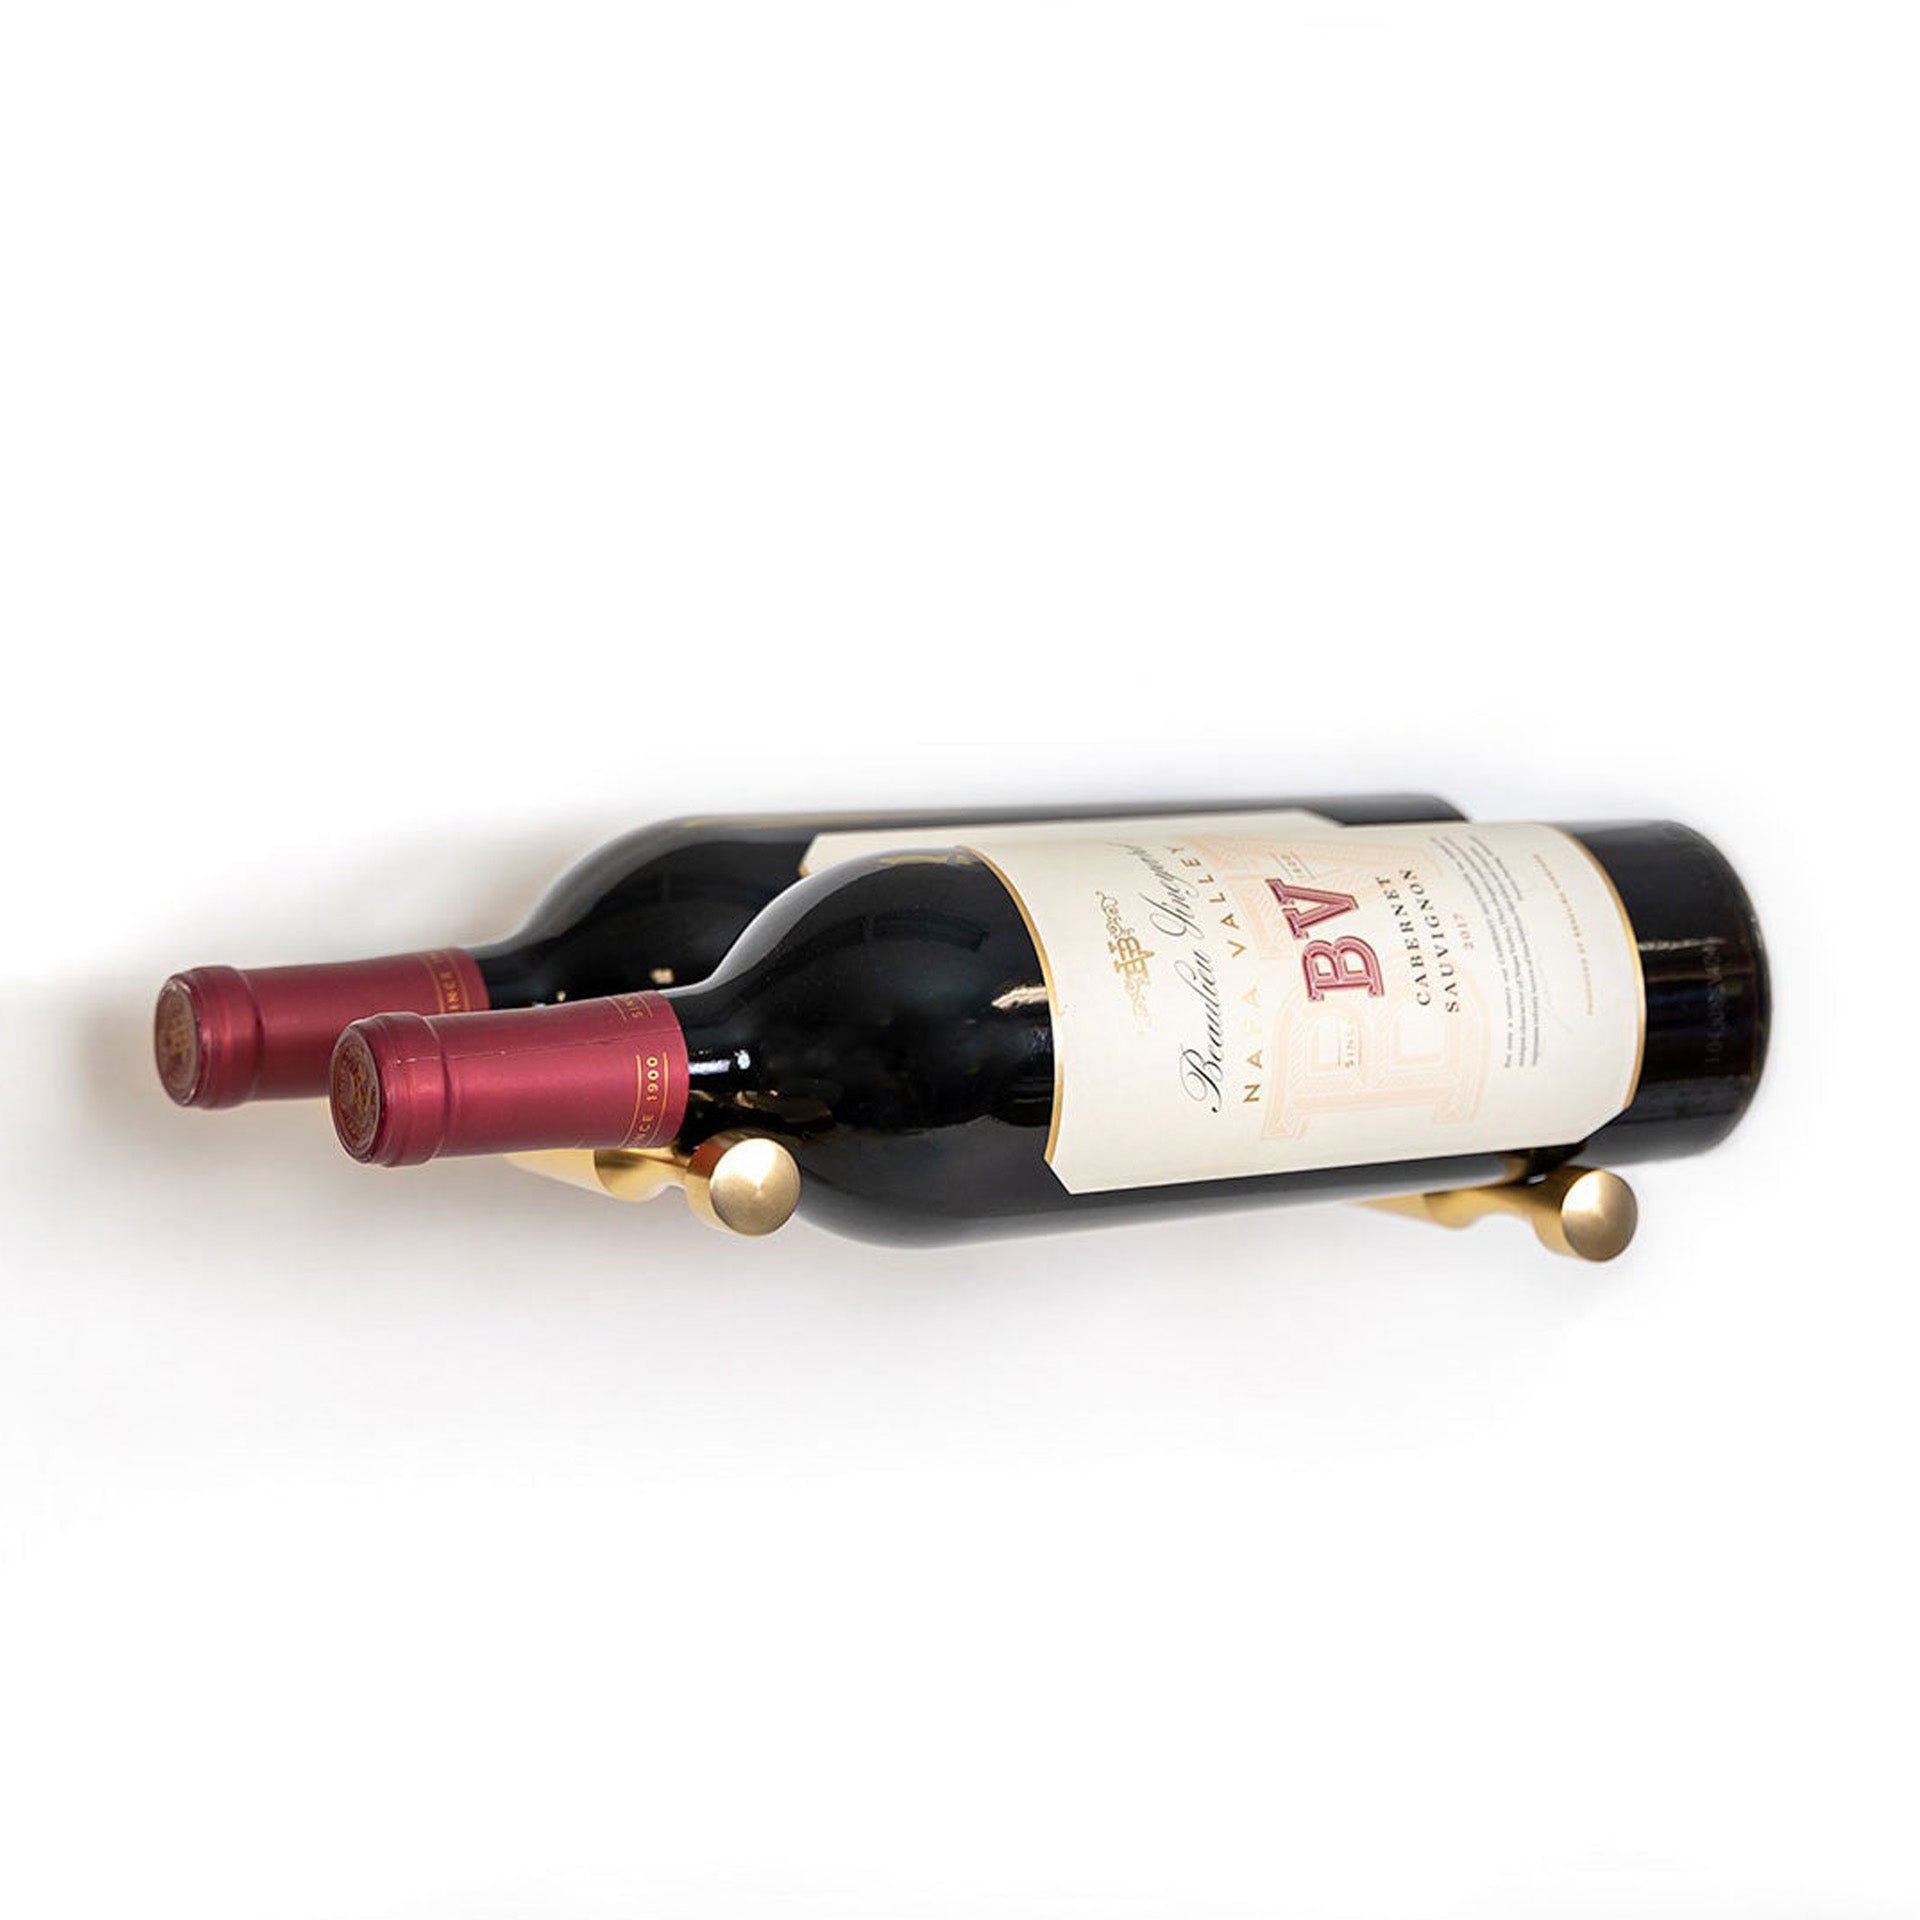 Wine Posts - 2 Bottles Deep - Sold in sets of 3 pairs (6 bottles)